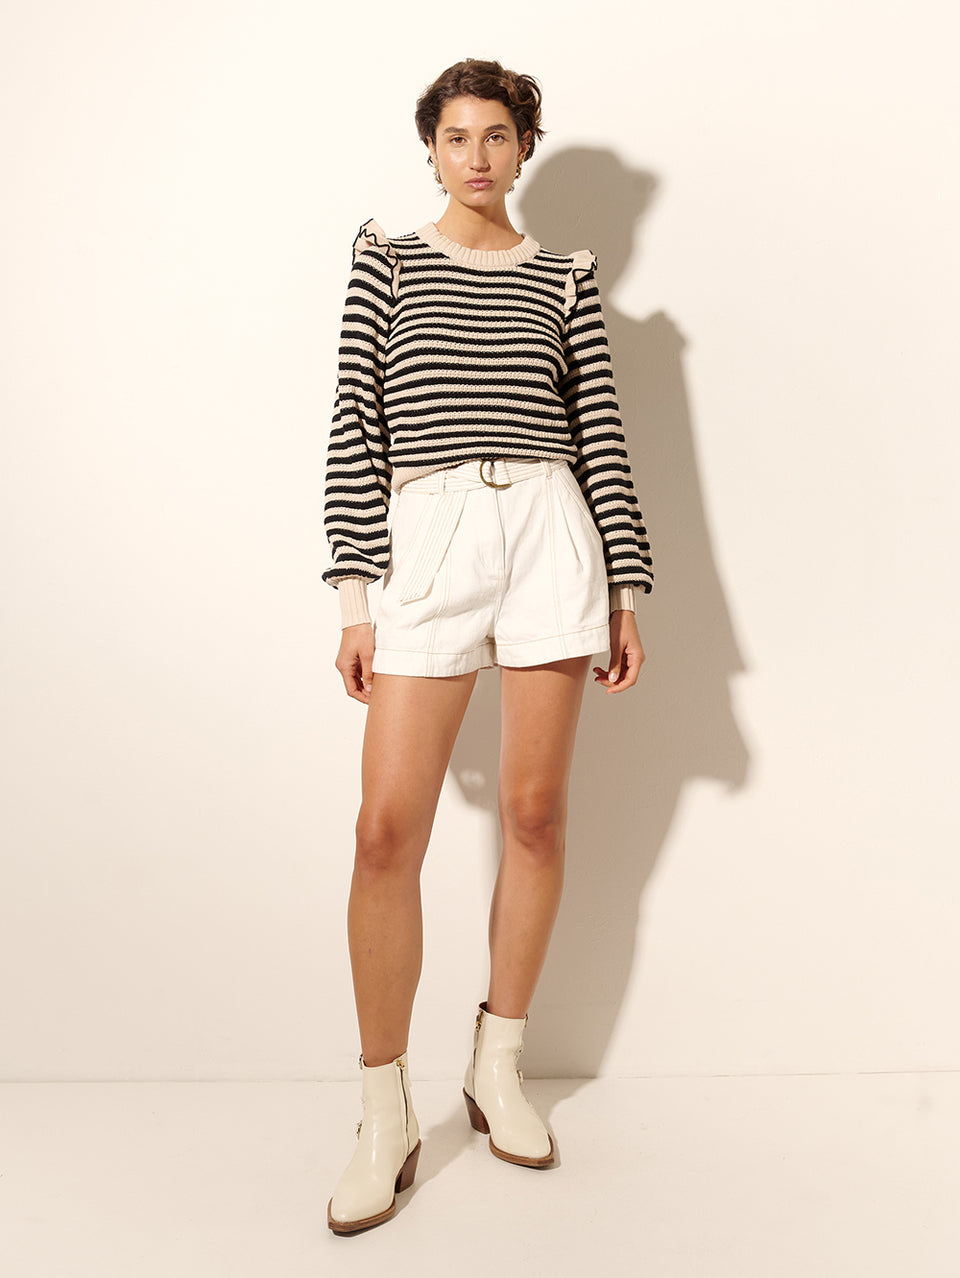 Anita Knit Top KIVARI | Model wears black and white striped knit jumper